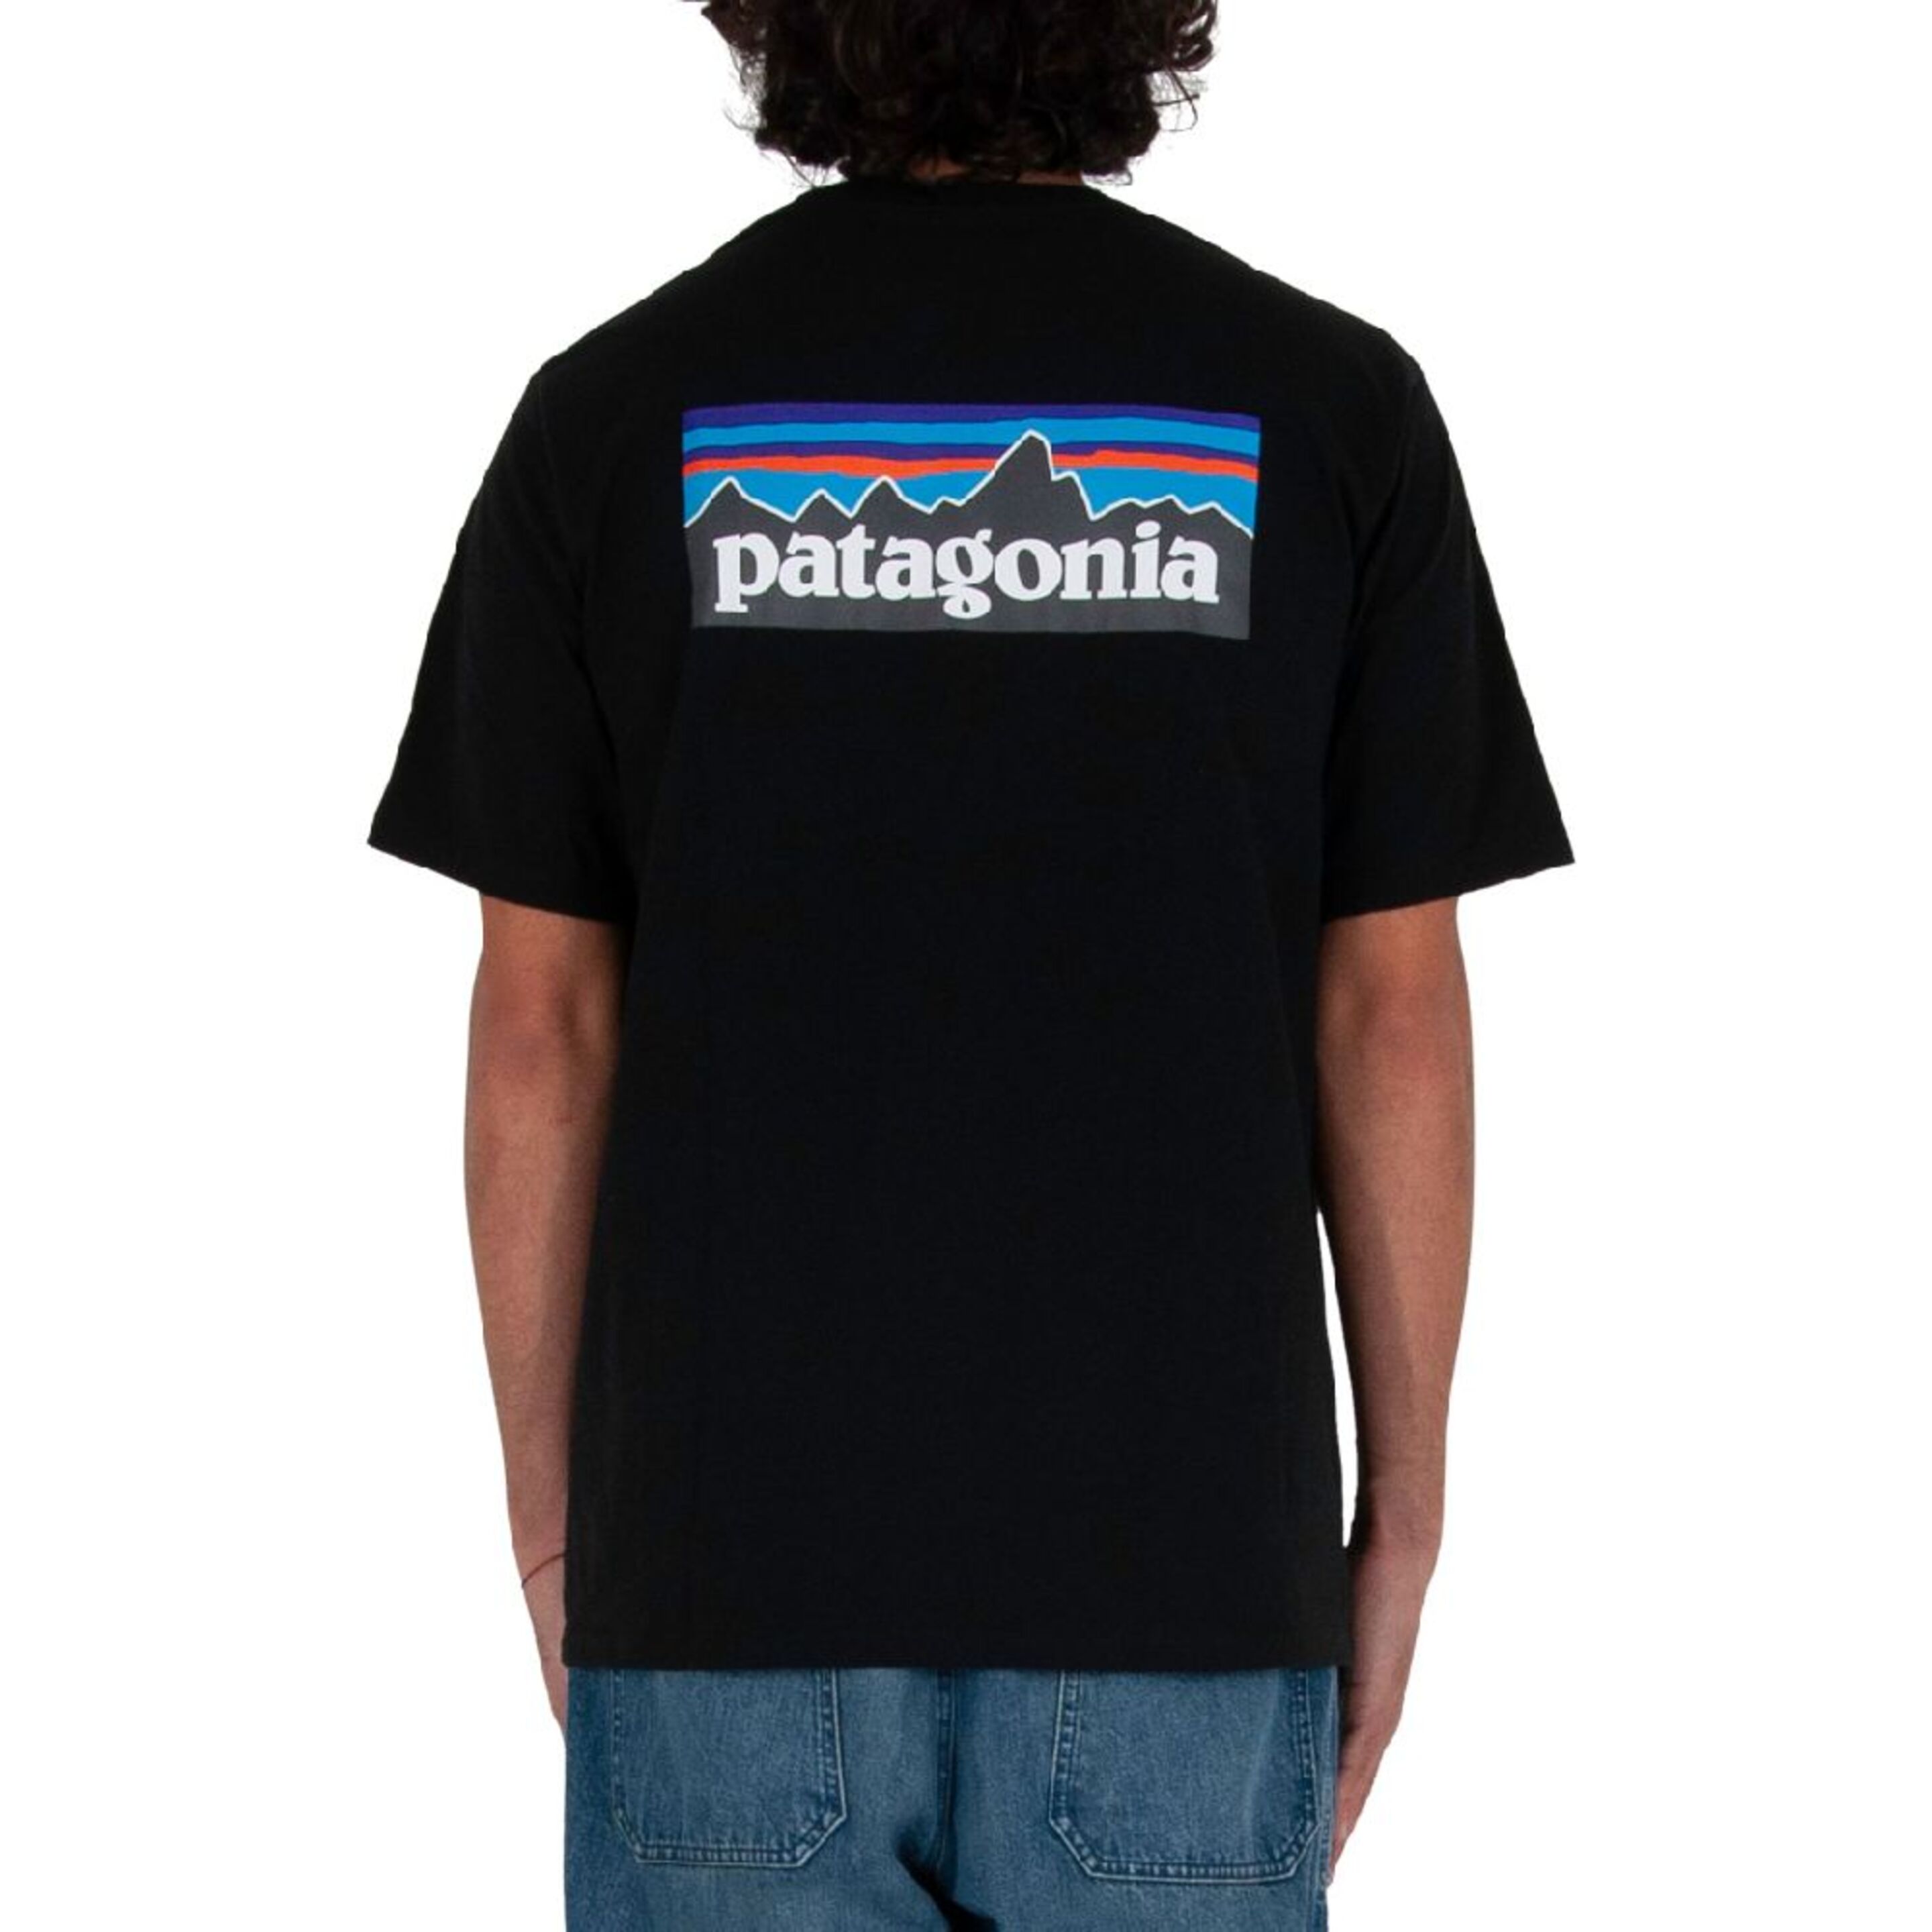 Camiseta Patagonia 38504blk